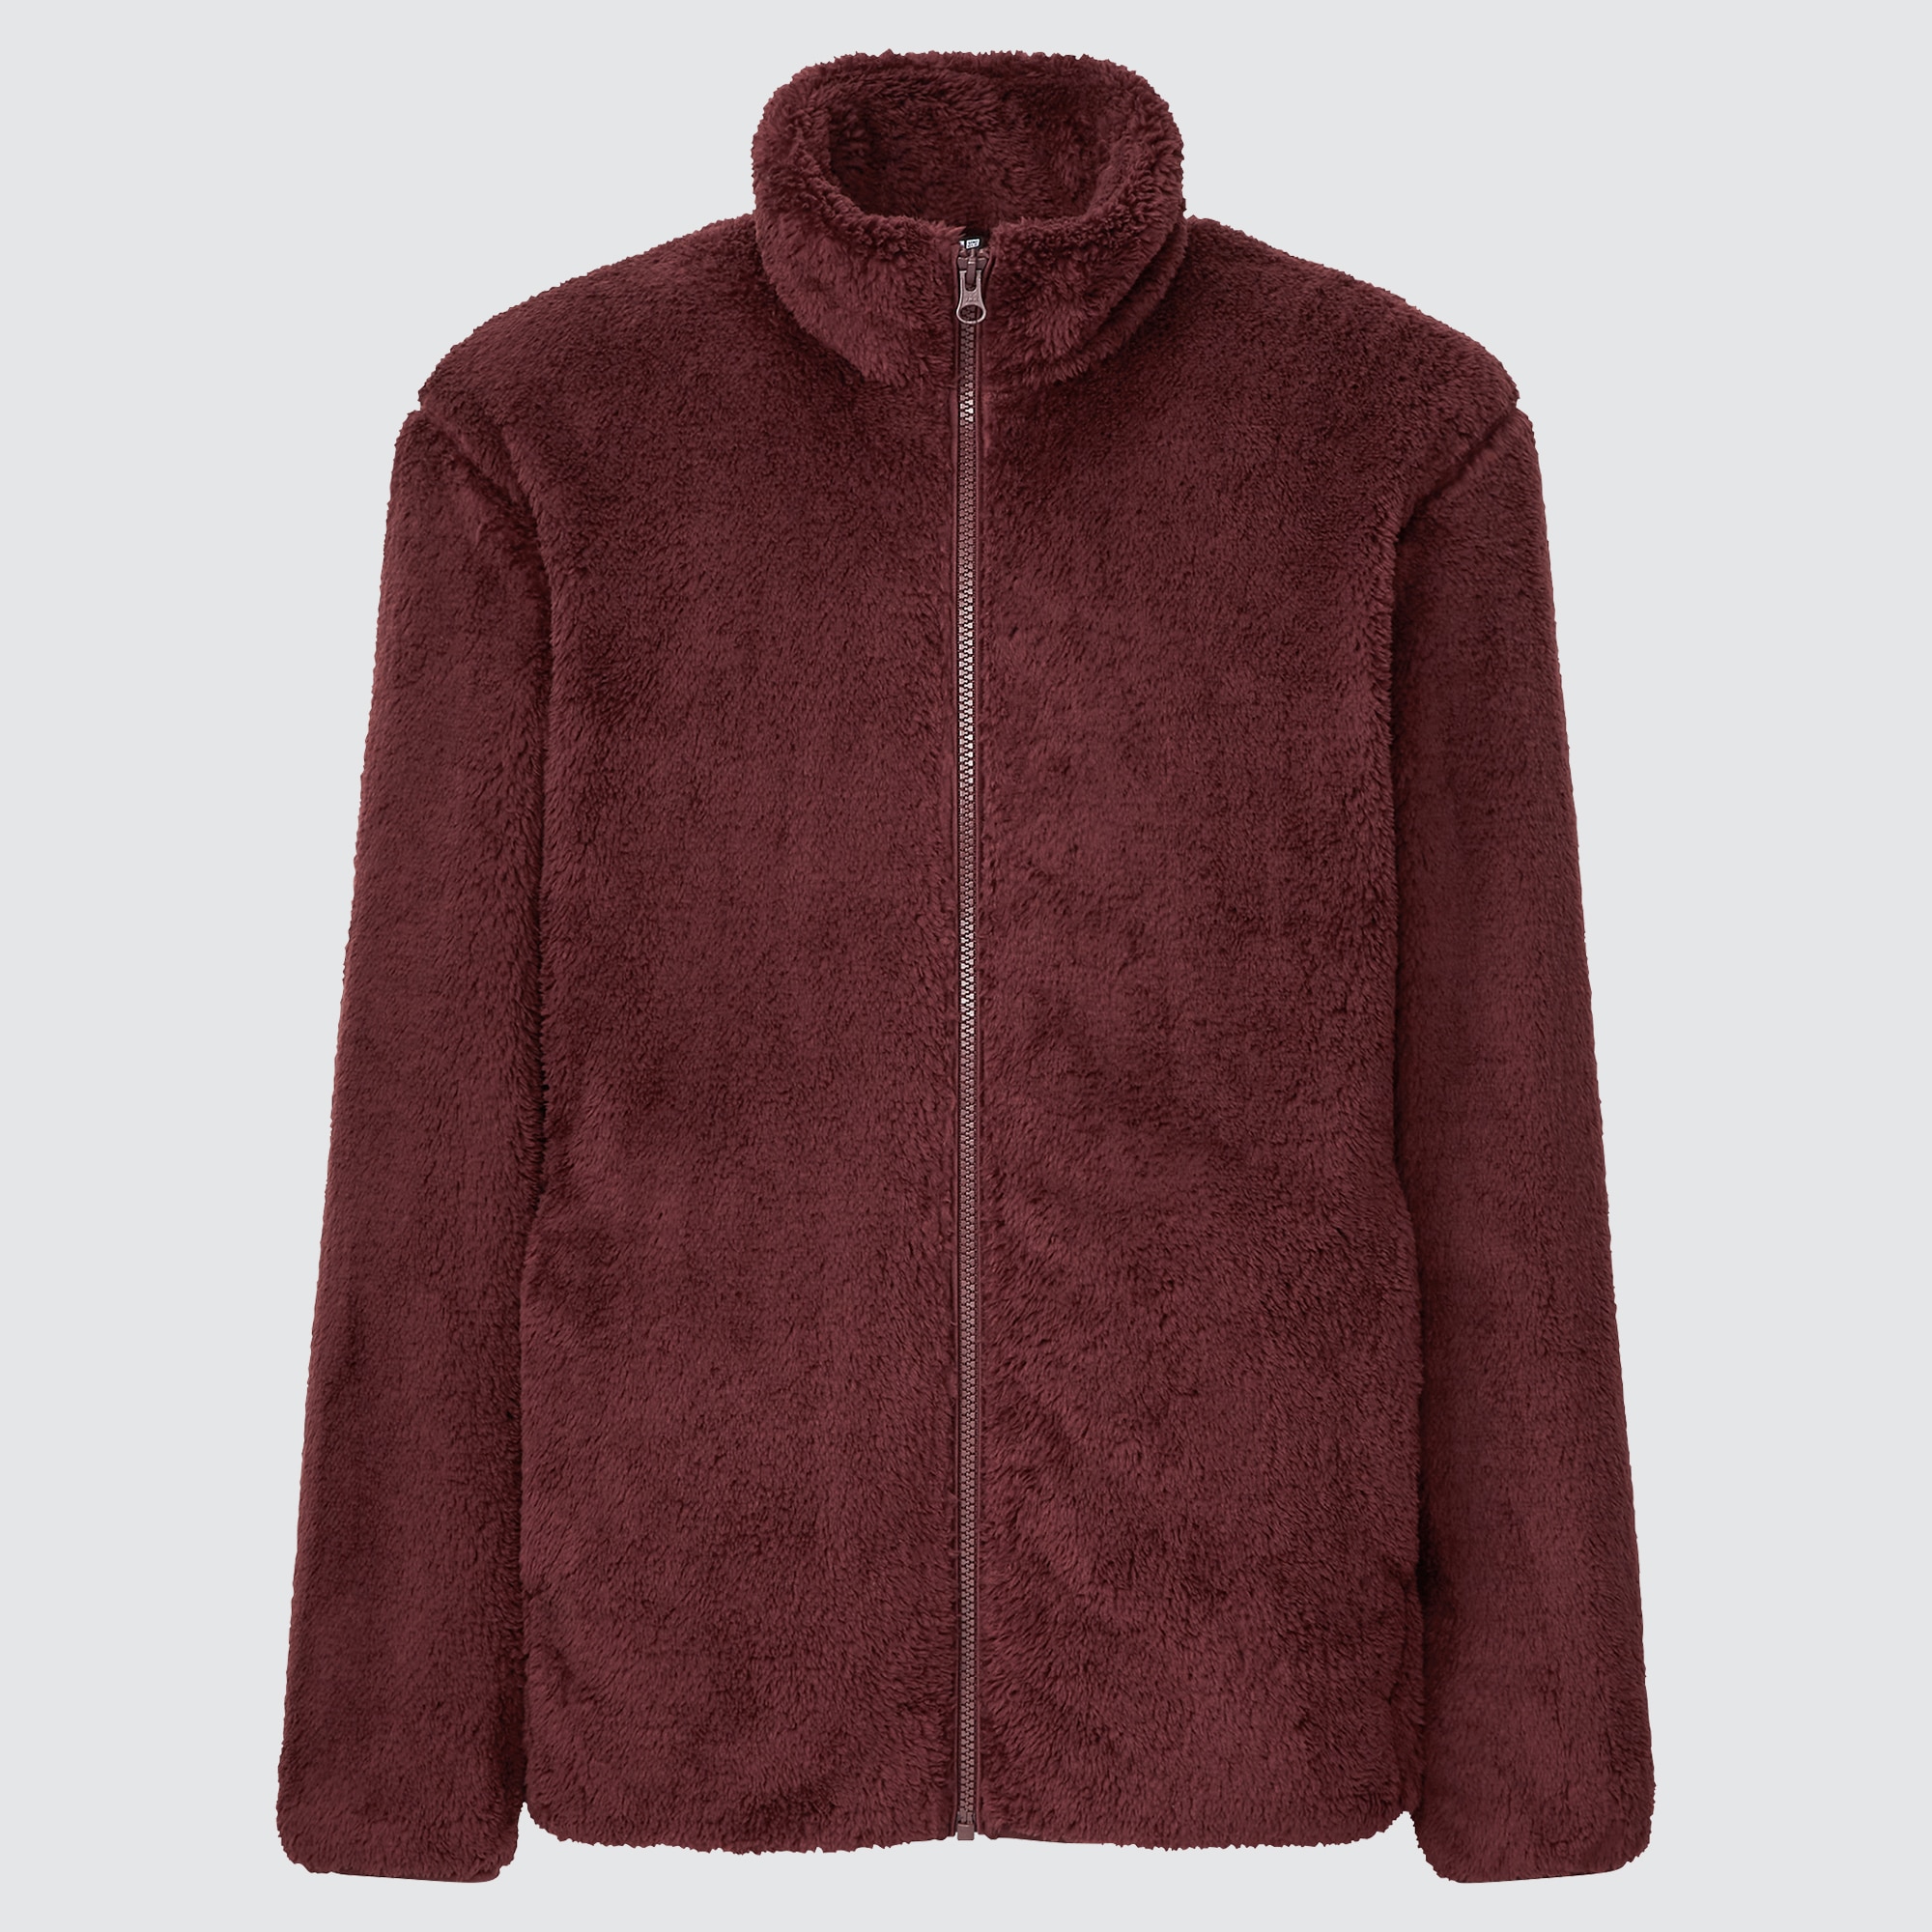 Check styling ideas for「Fluffy Yarn Fleece Full-Zip Jacket (2021 Edition)」